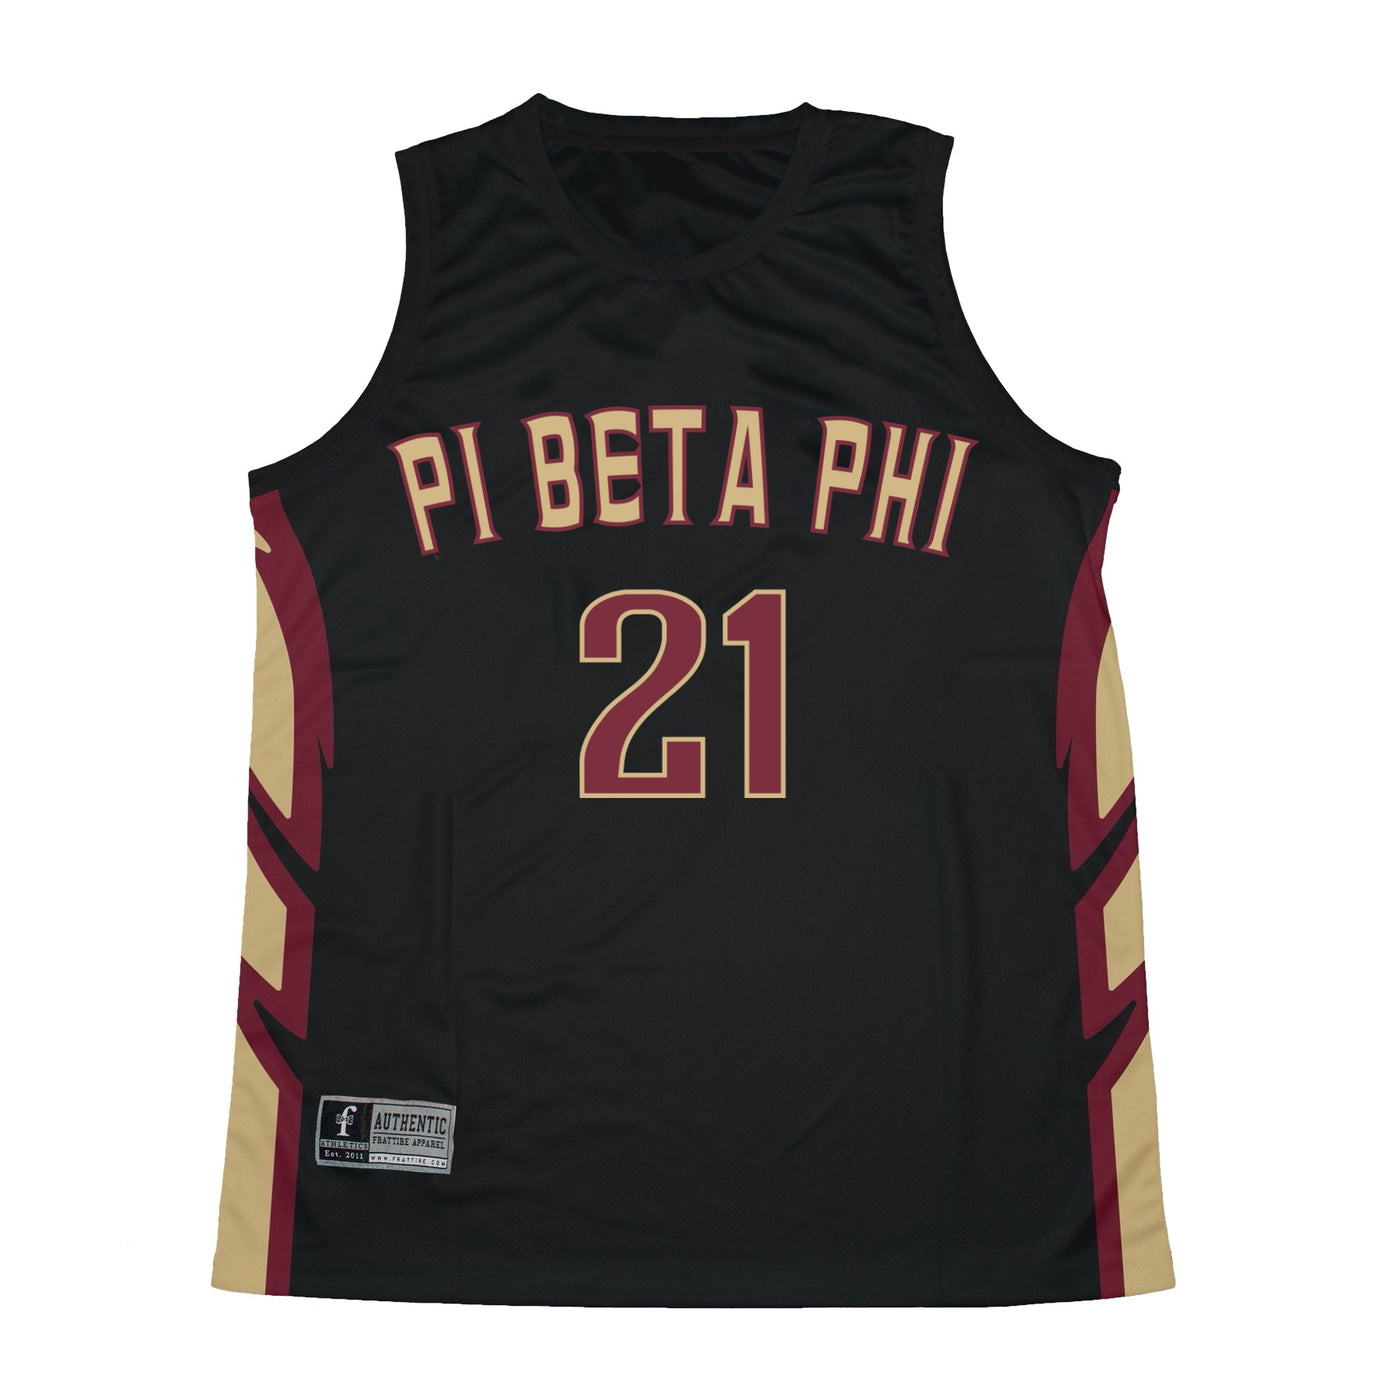 Pi Beta Phi Basketball Jersey